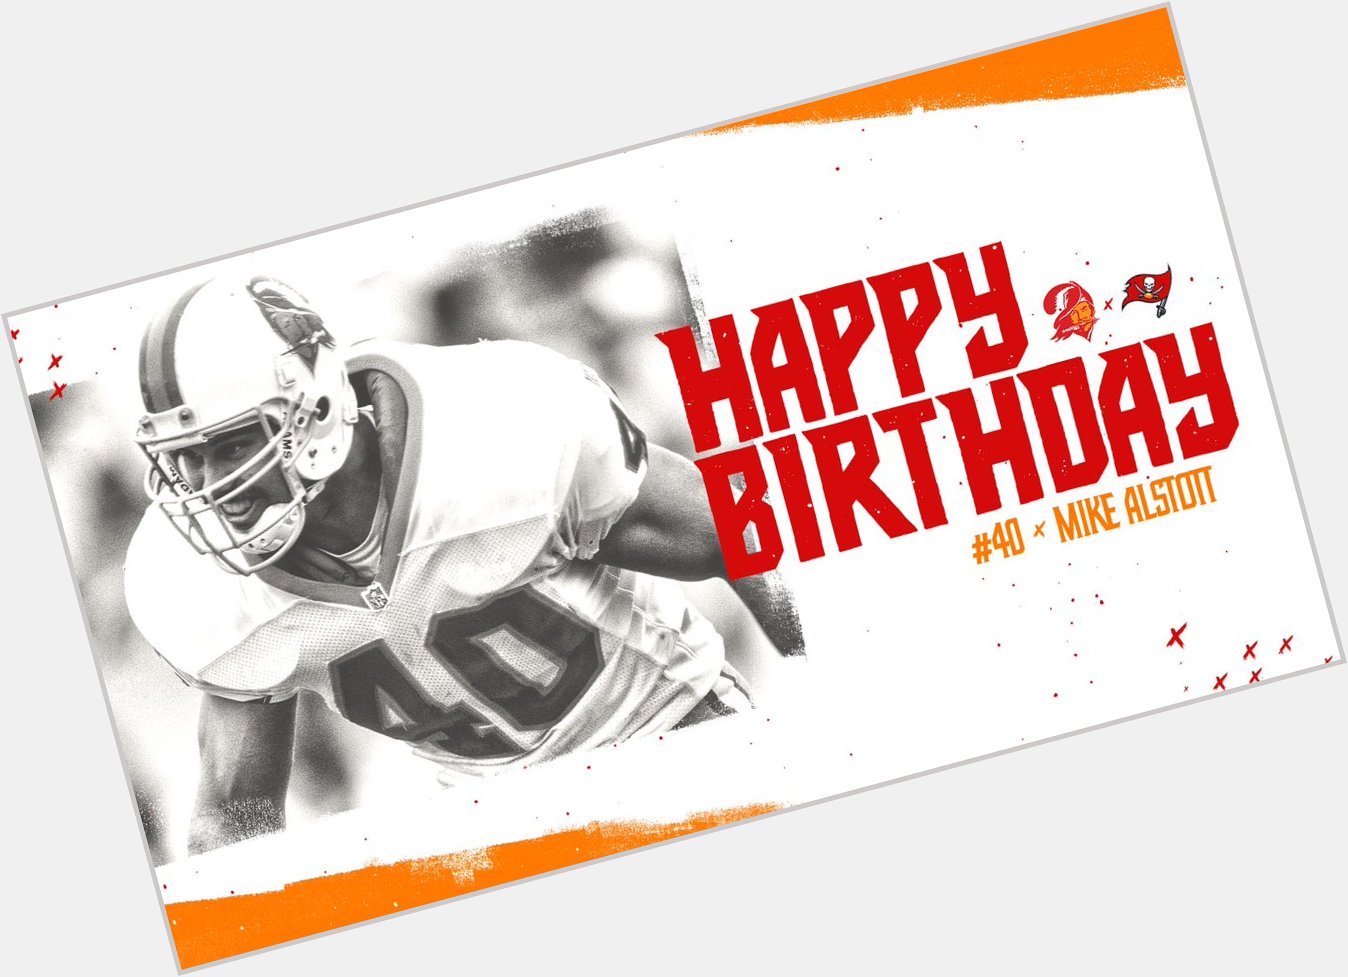 To wish legend Mike Alstott a happy birthday!  